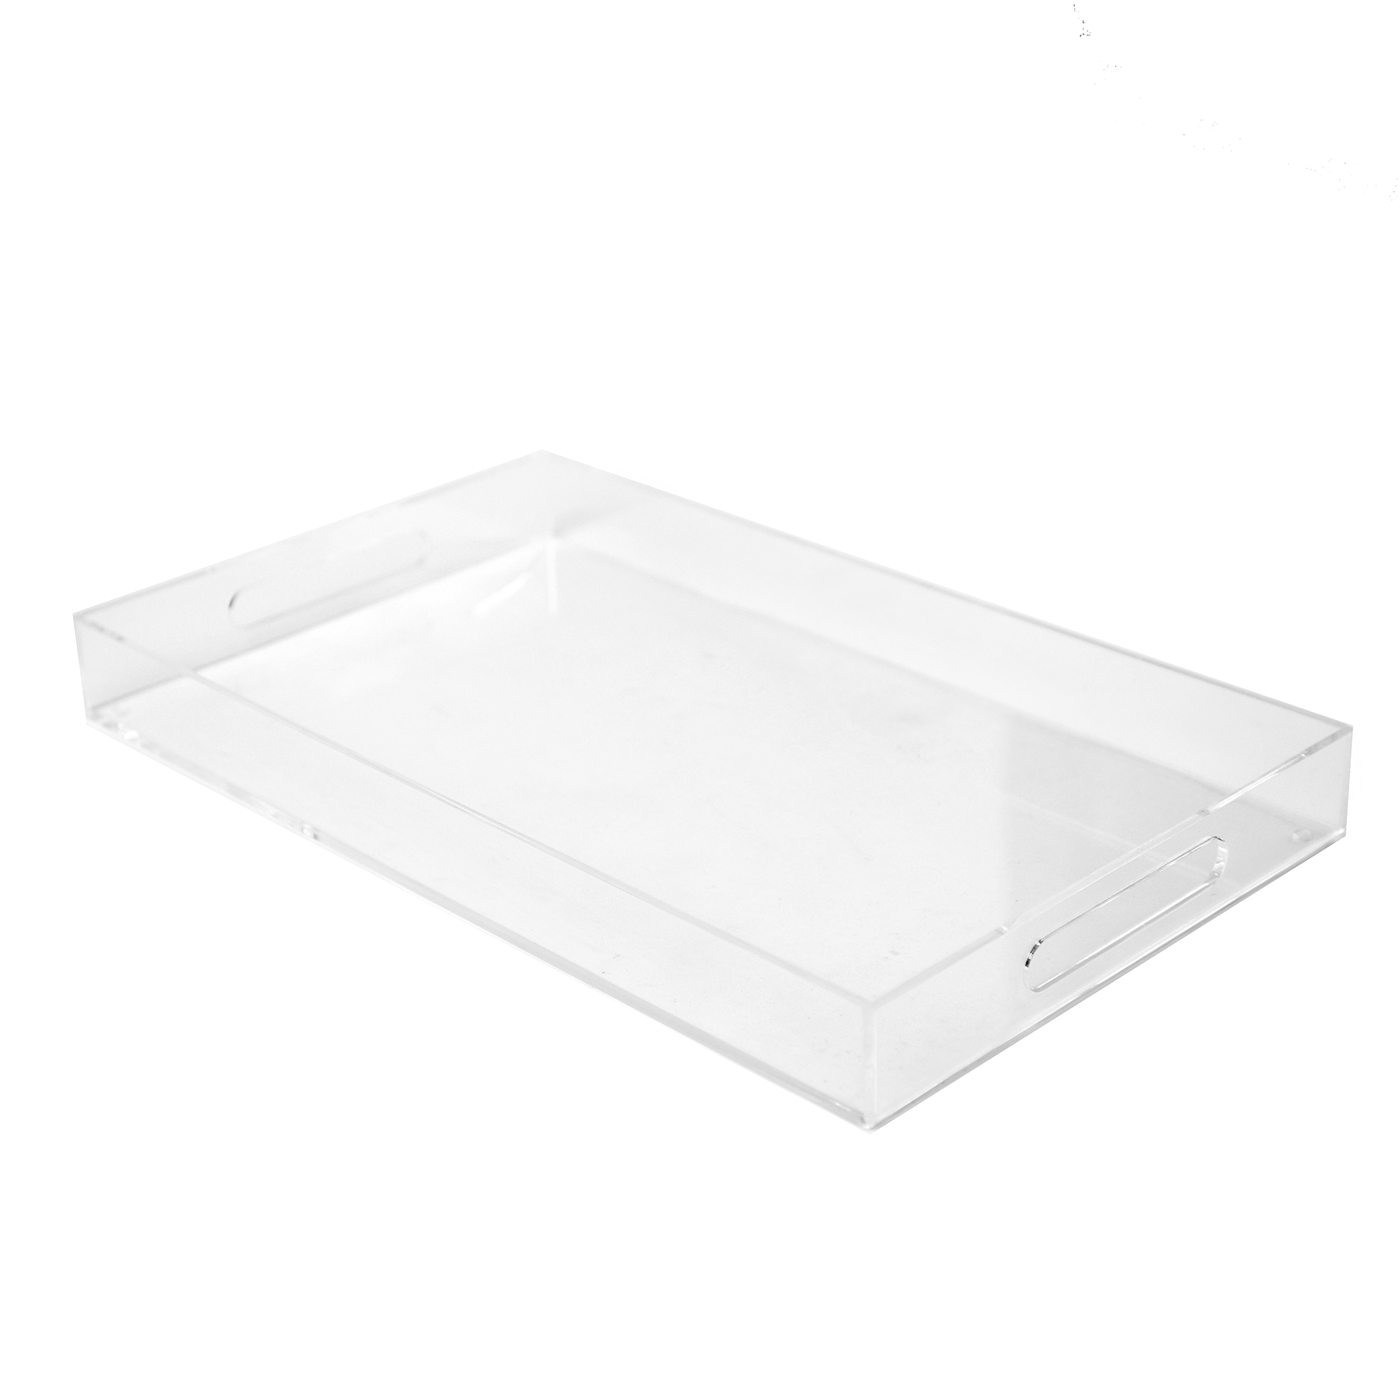 Plastic Tray - White Rectangular Serving Tray